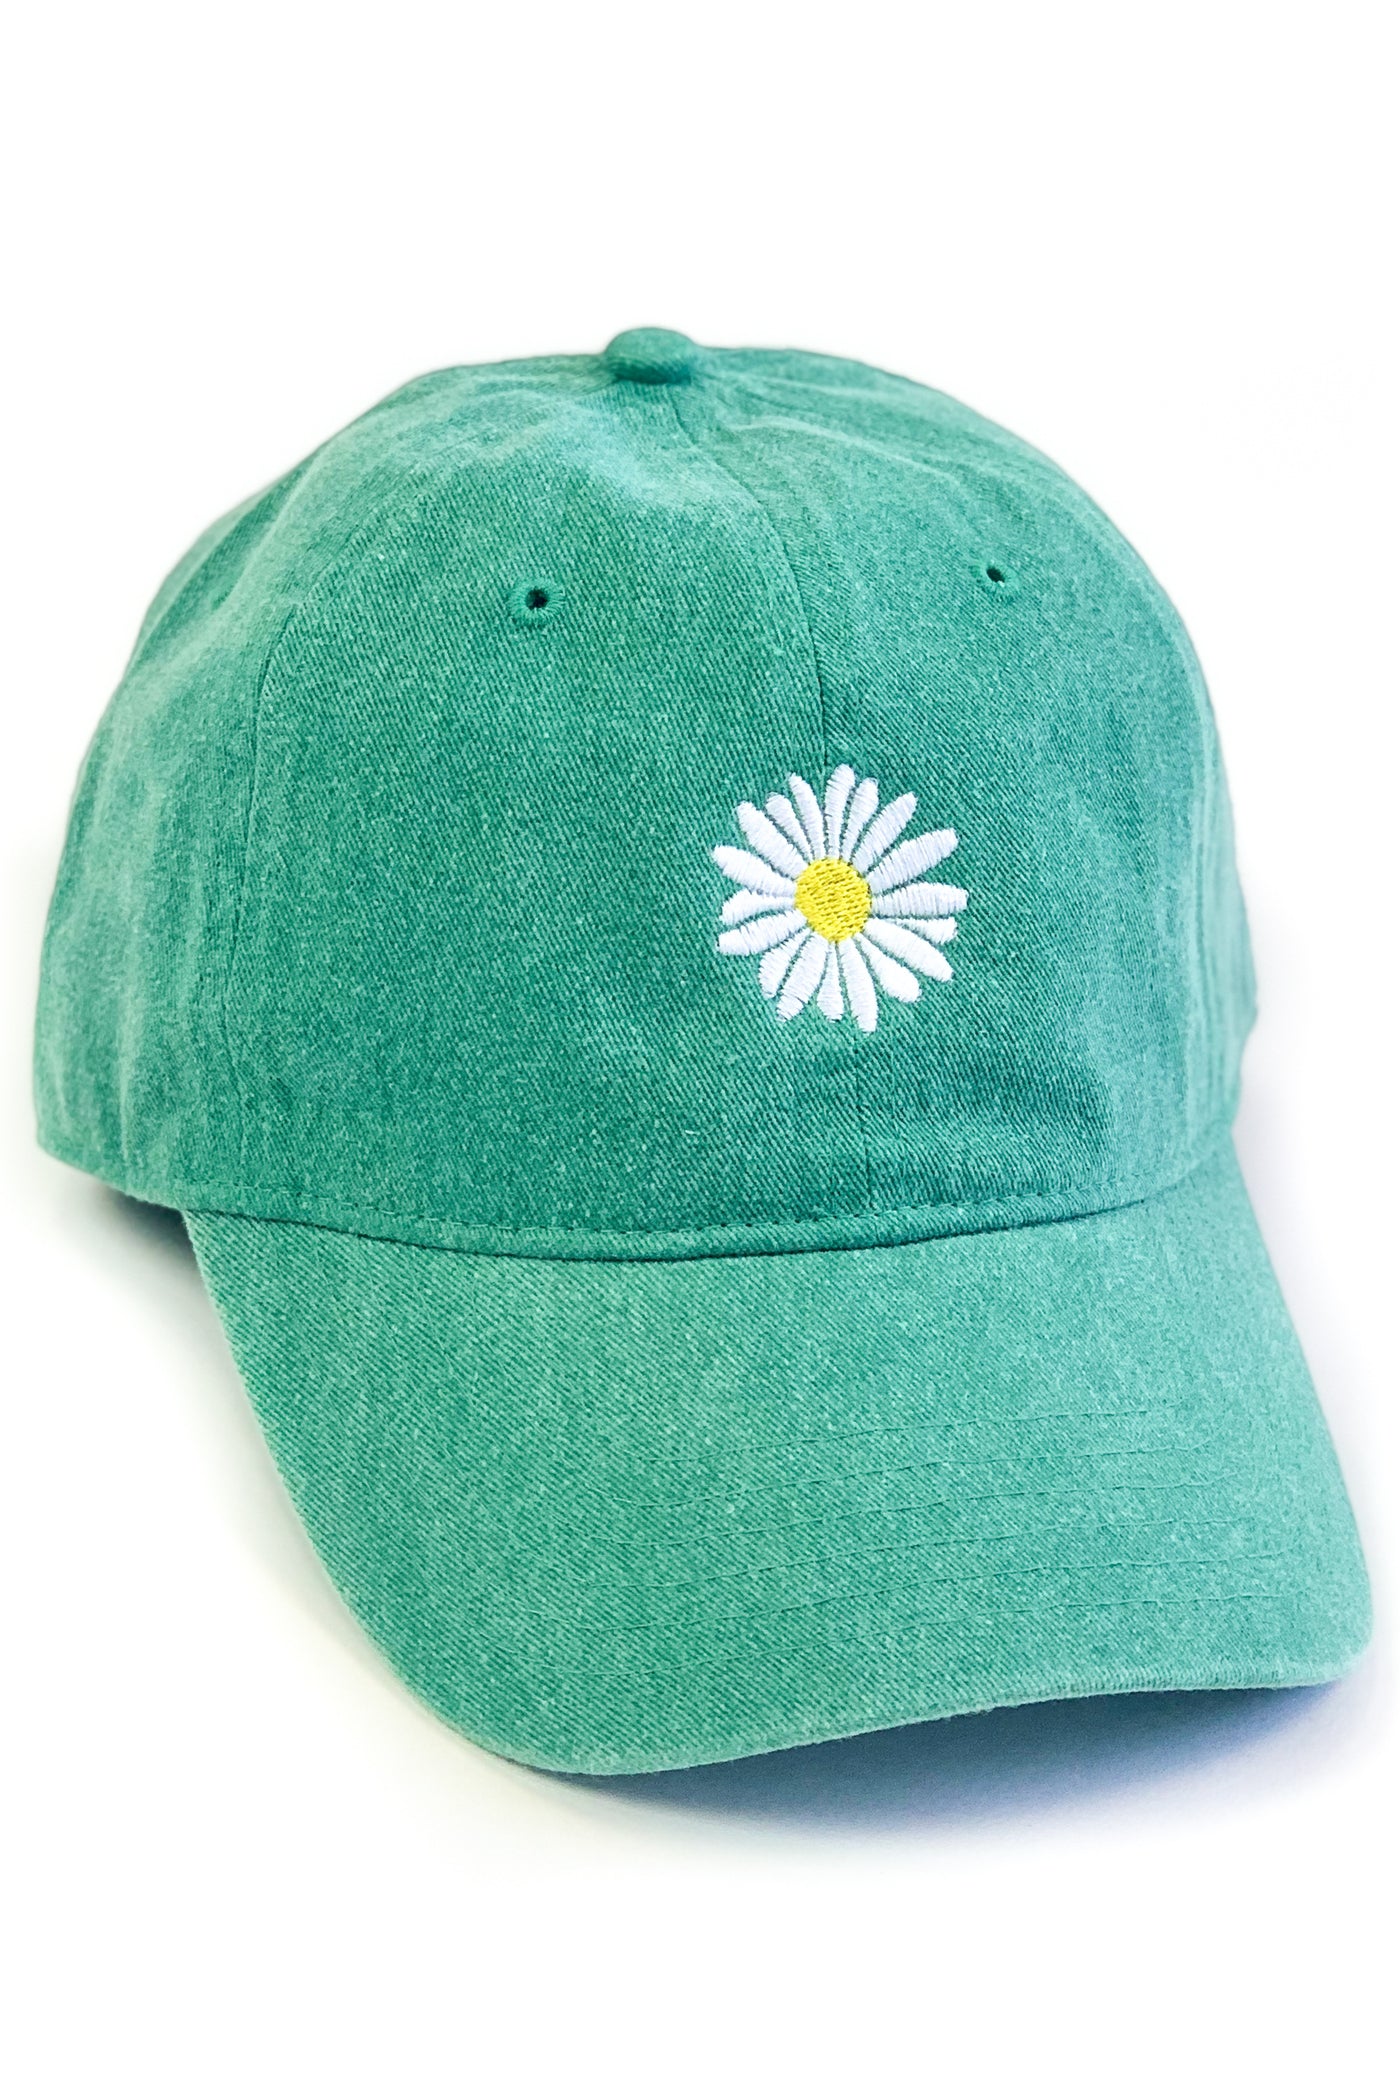 "Fresh As A Daisy" Embroidered Ball Cap